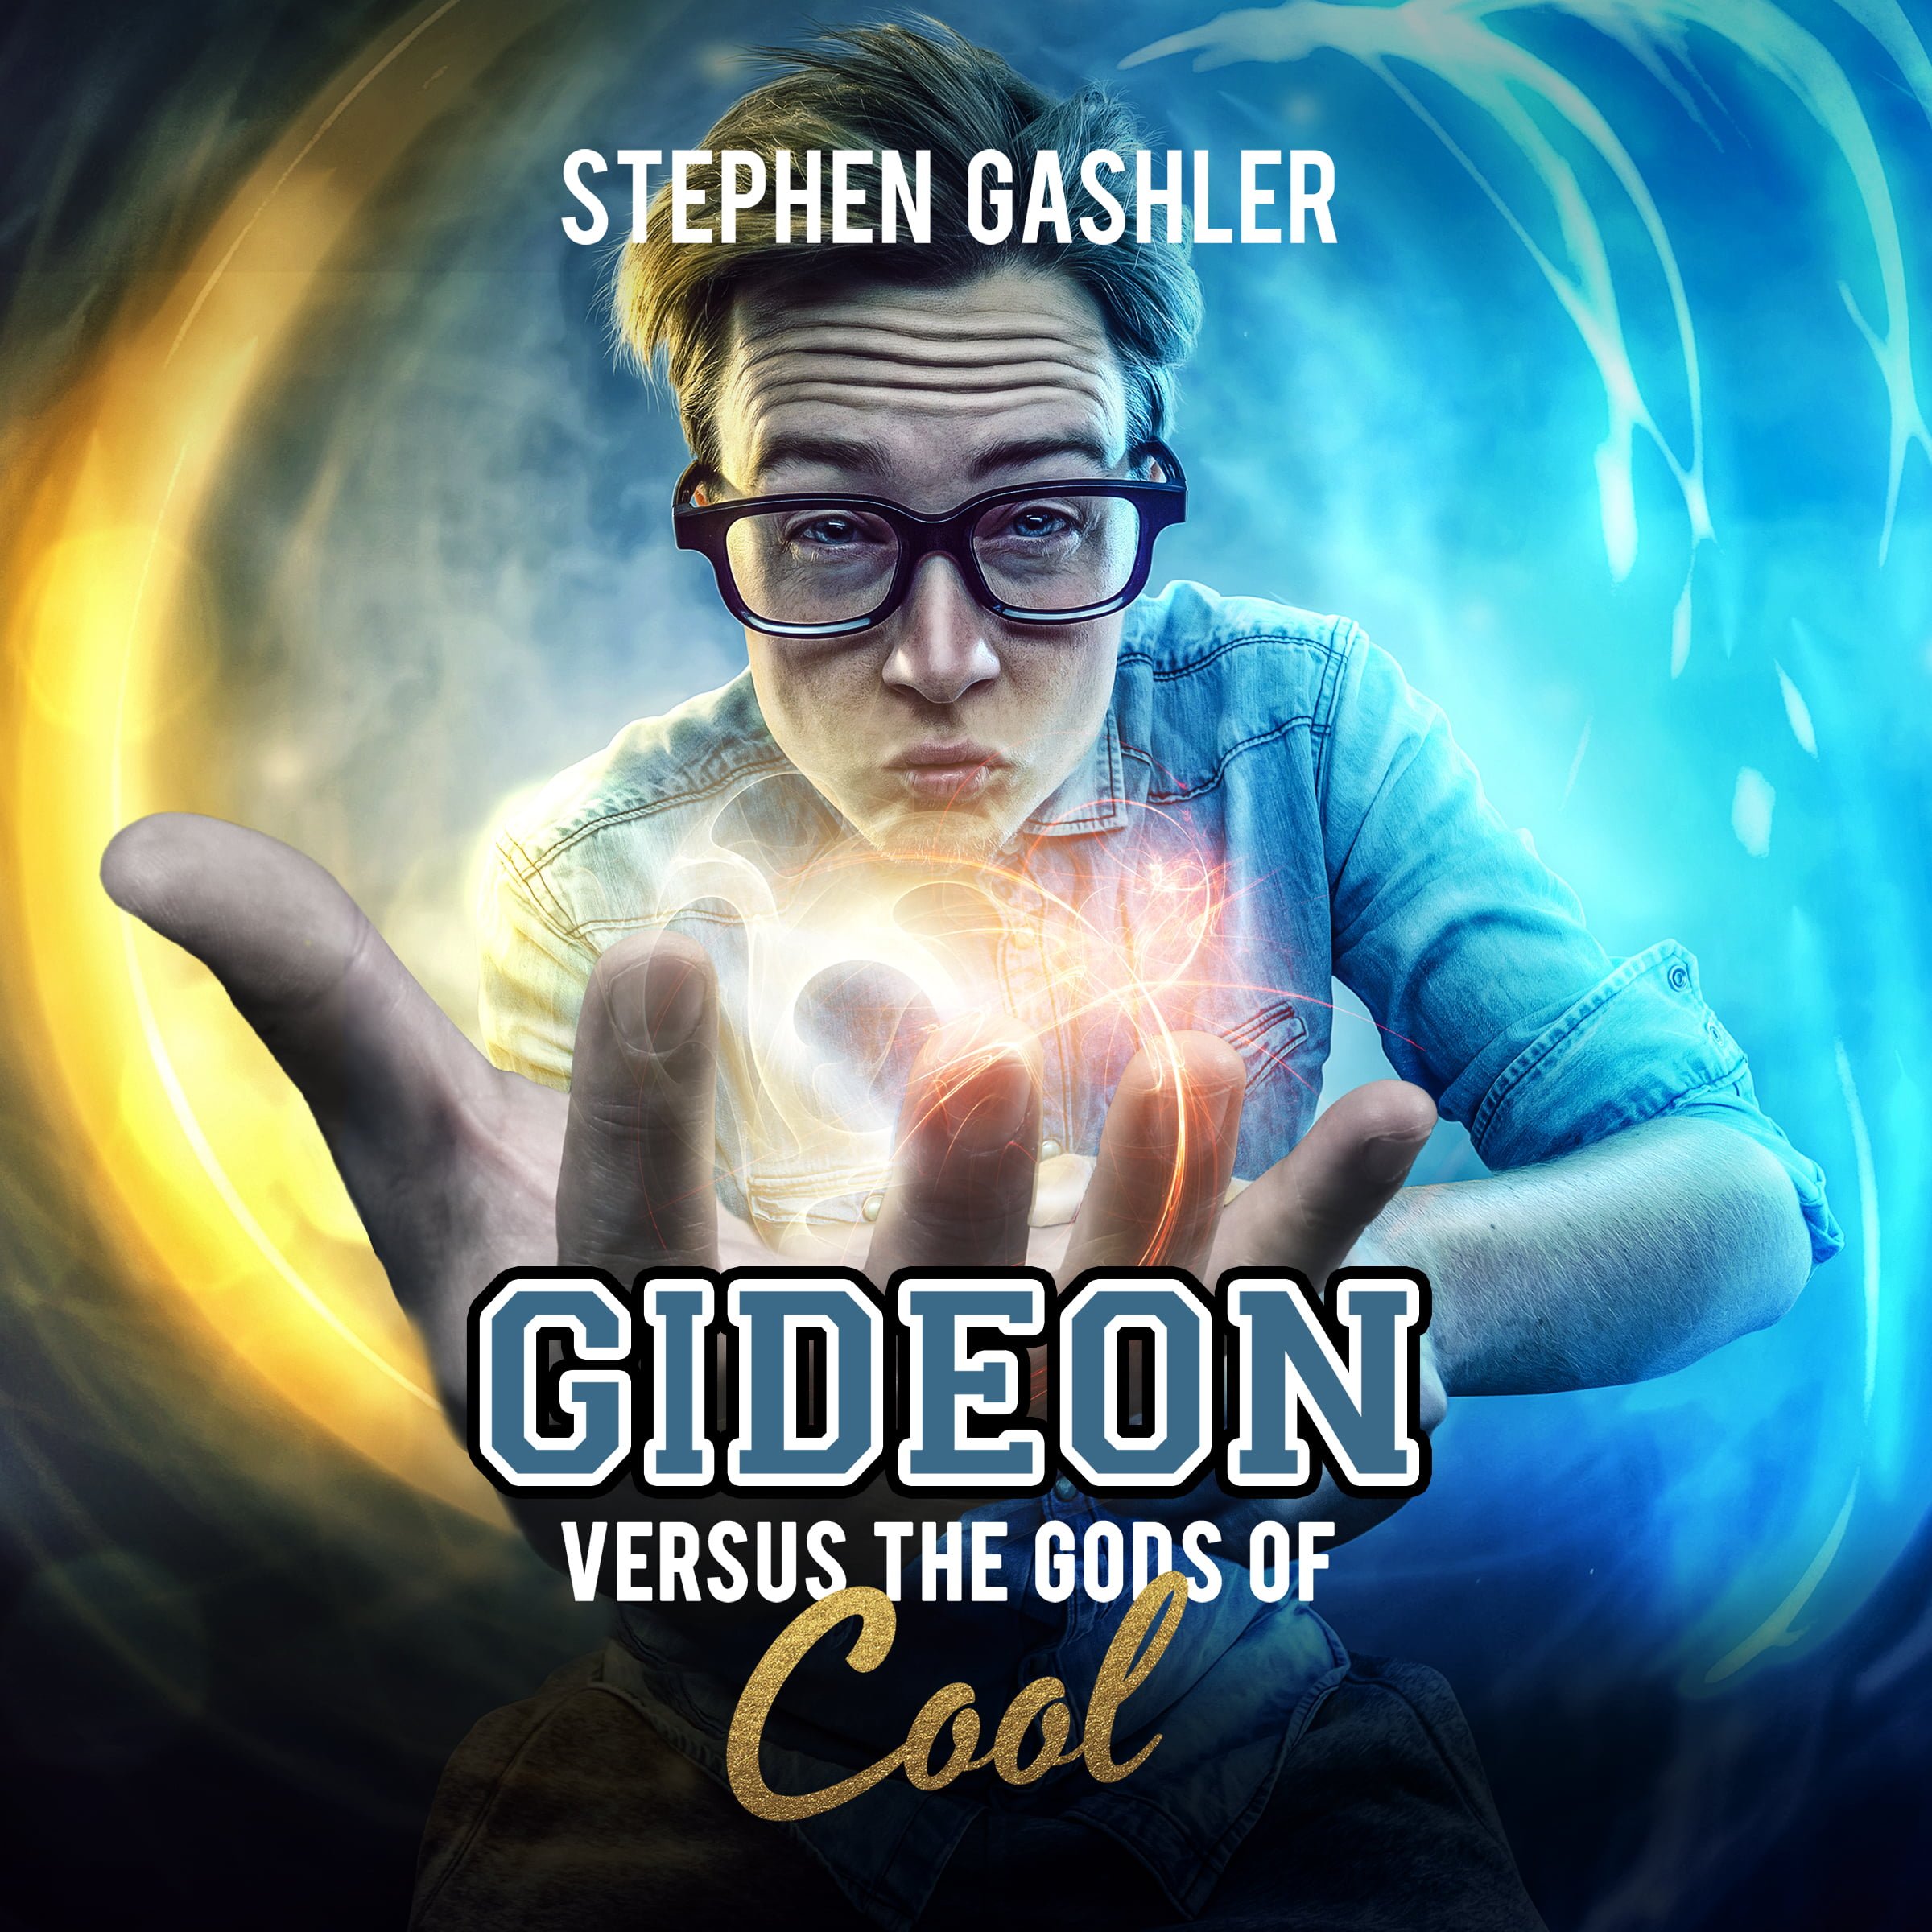 Stephen Gashler's GIDEON VERSUS THE GODS OF COOL